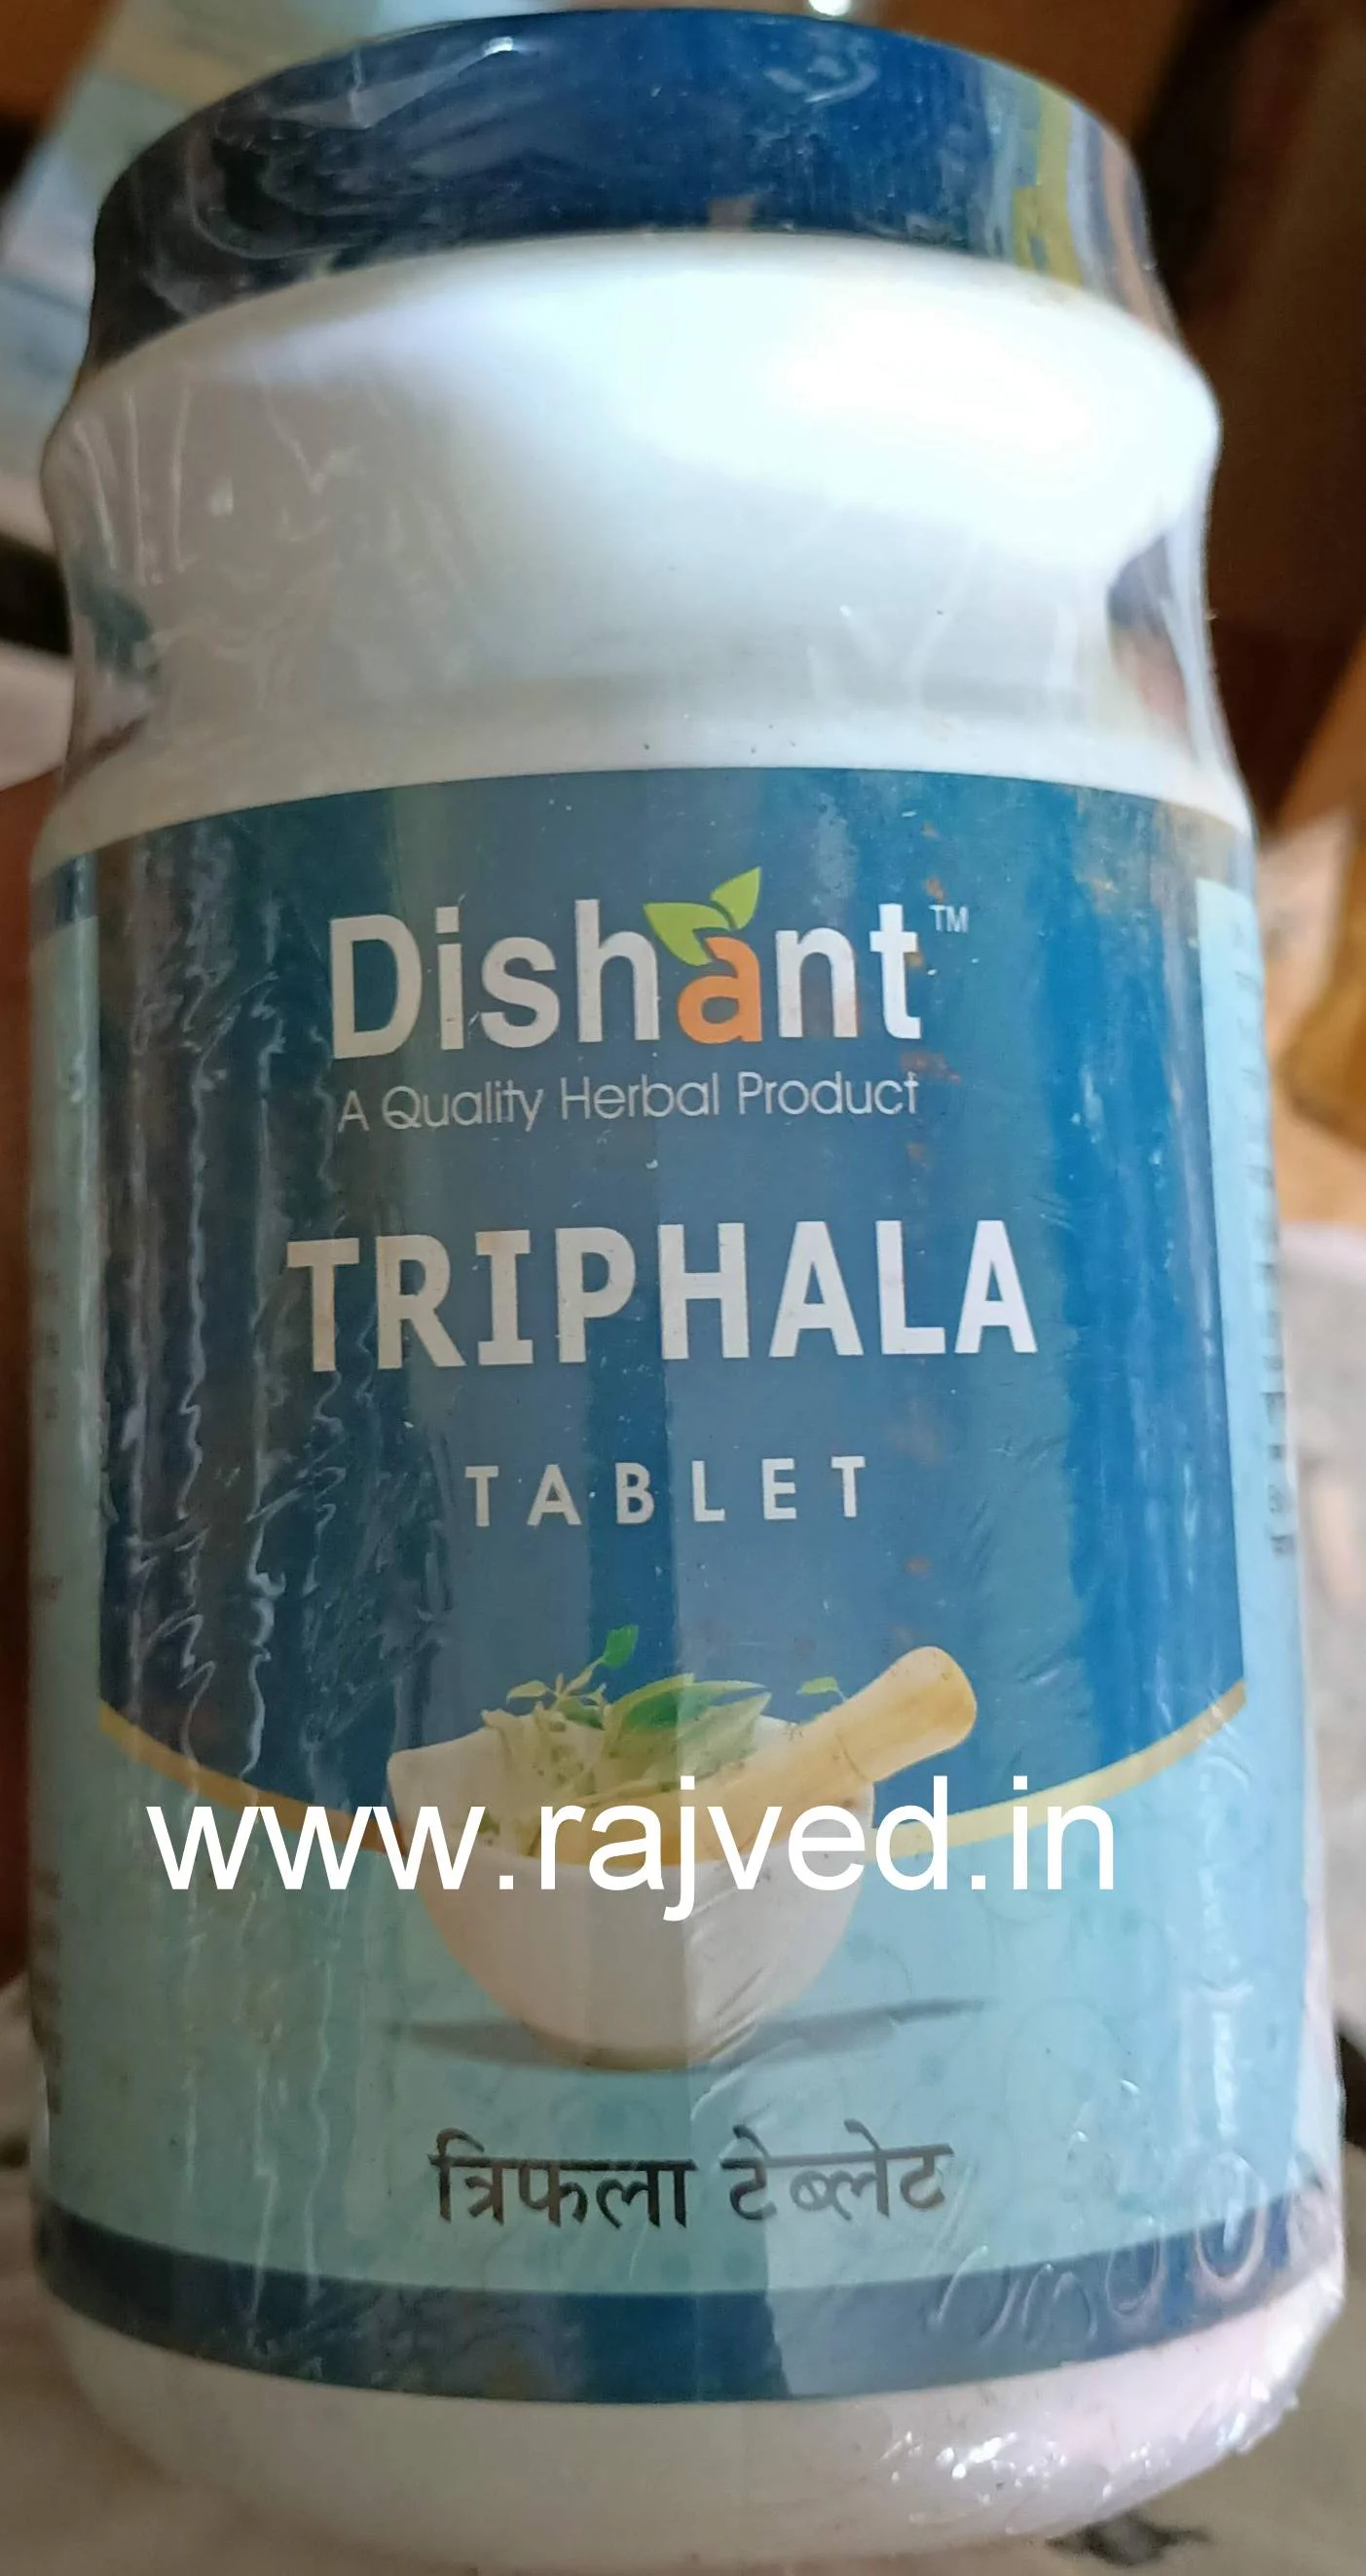 triphala tablets 500 gm upto 20% off dishant ayurvedic suppliers